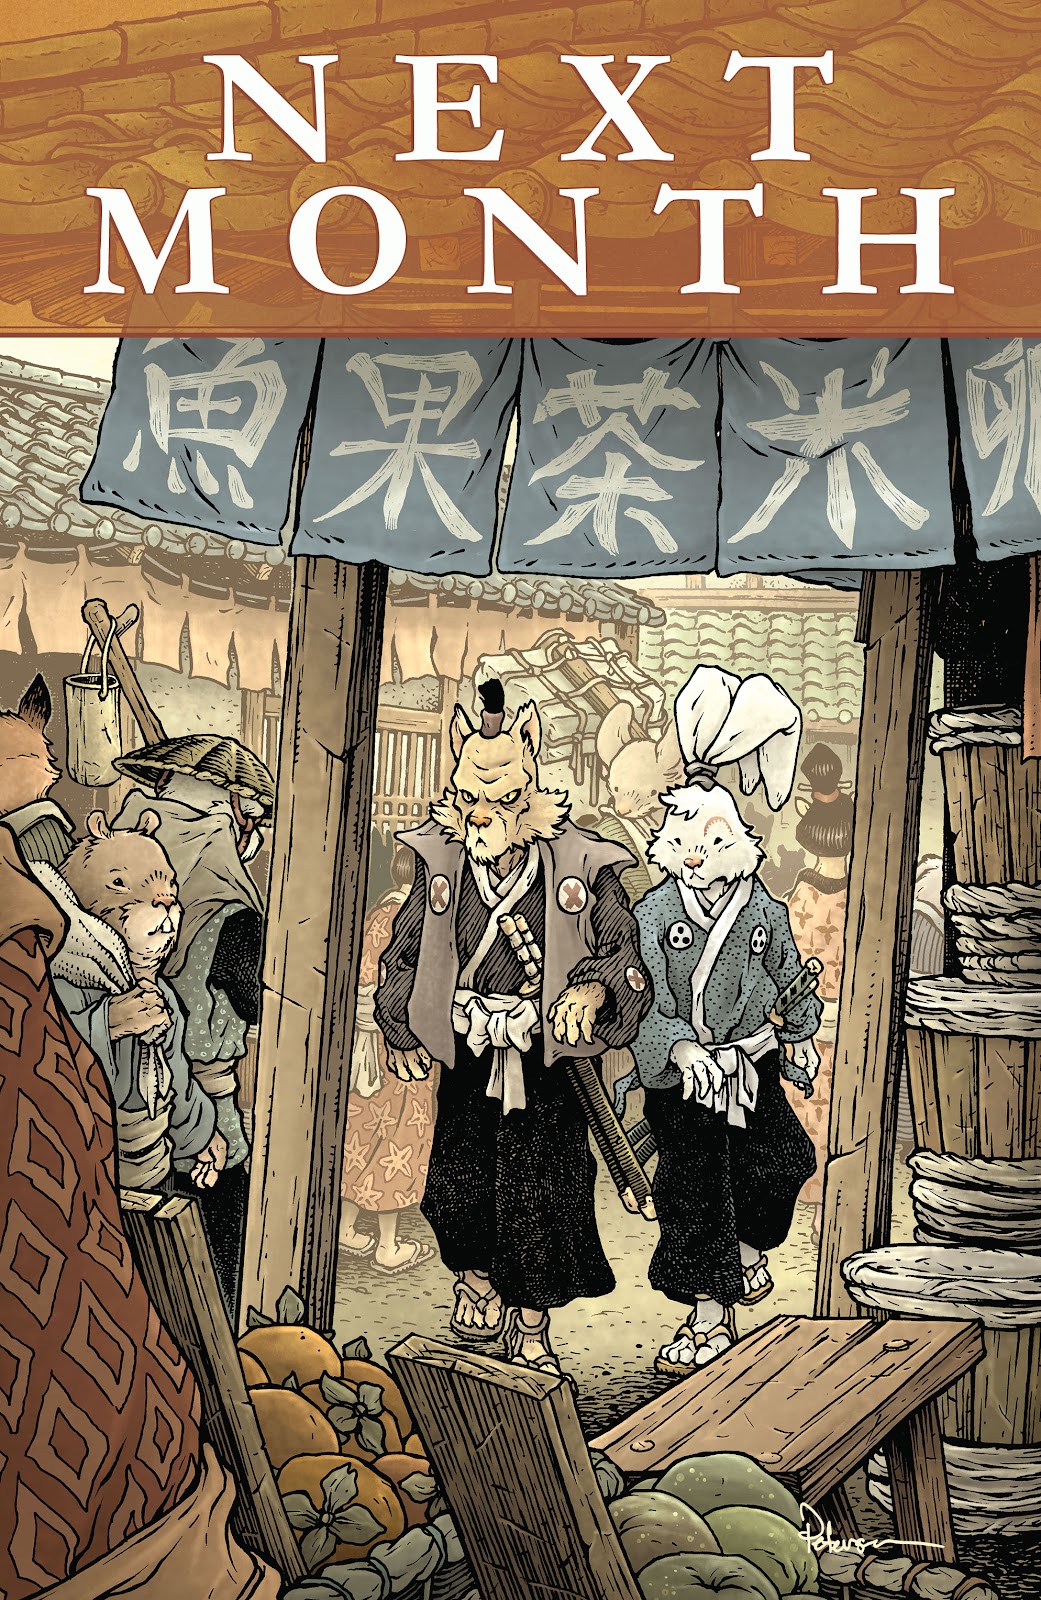 Usagi Yojimbo: Lone Goat and Kid issue 4 - Page 23